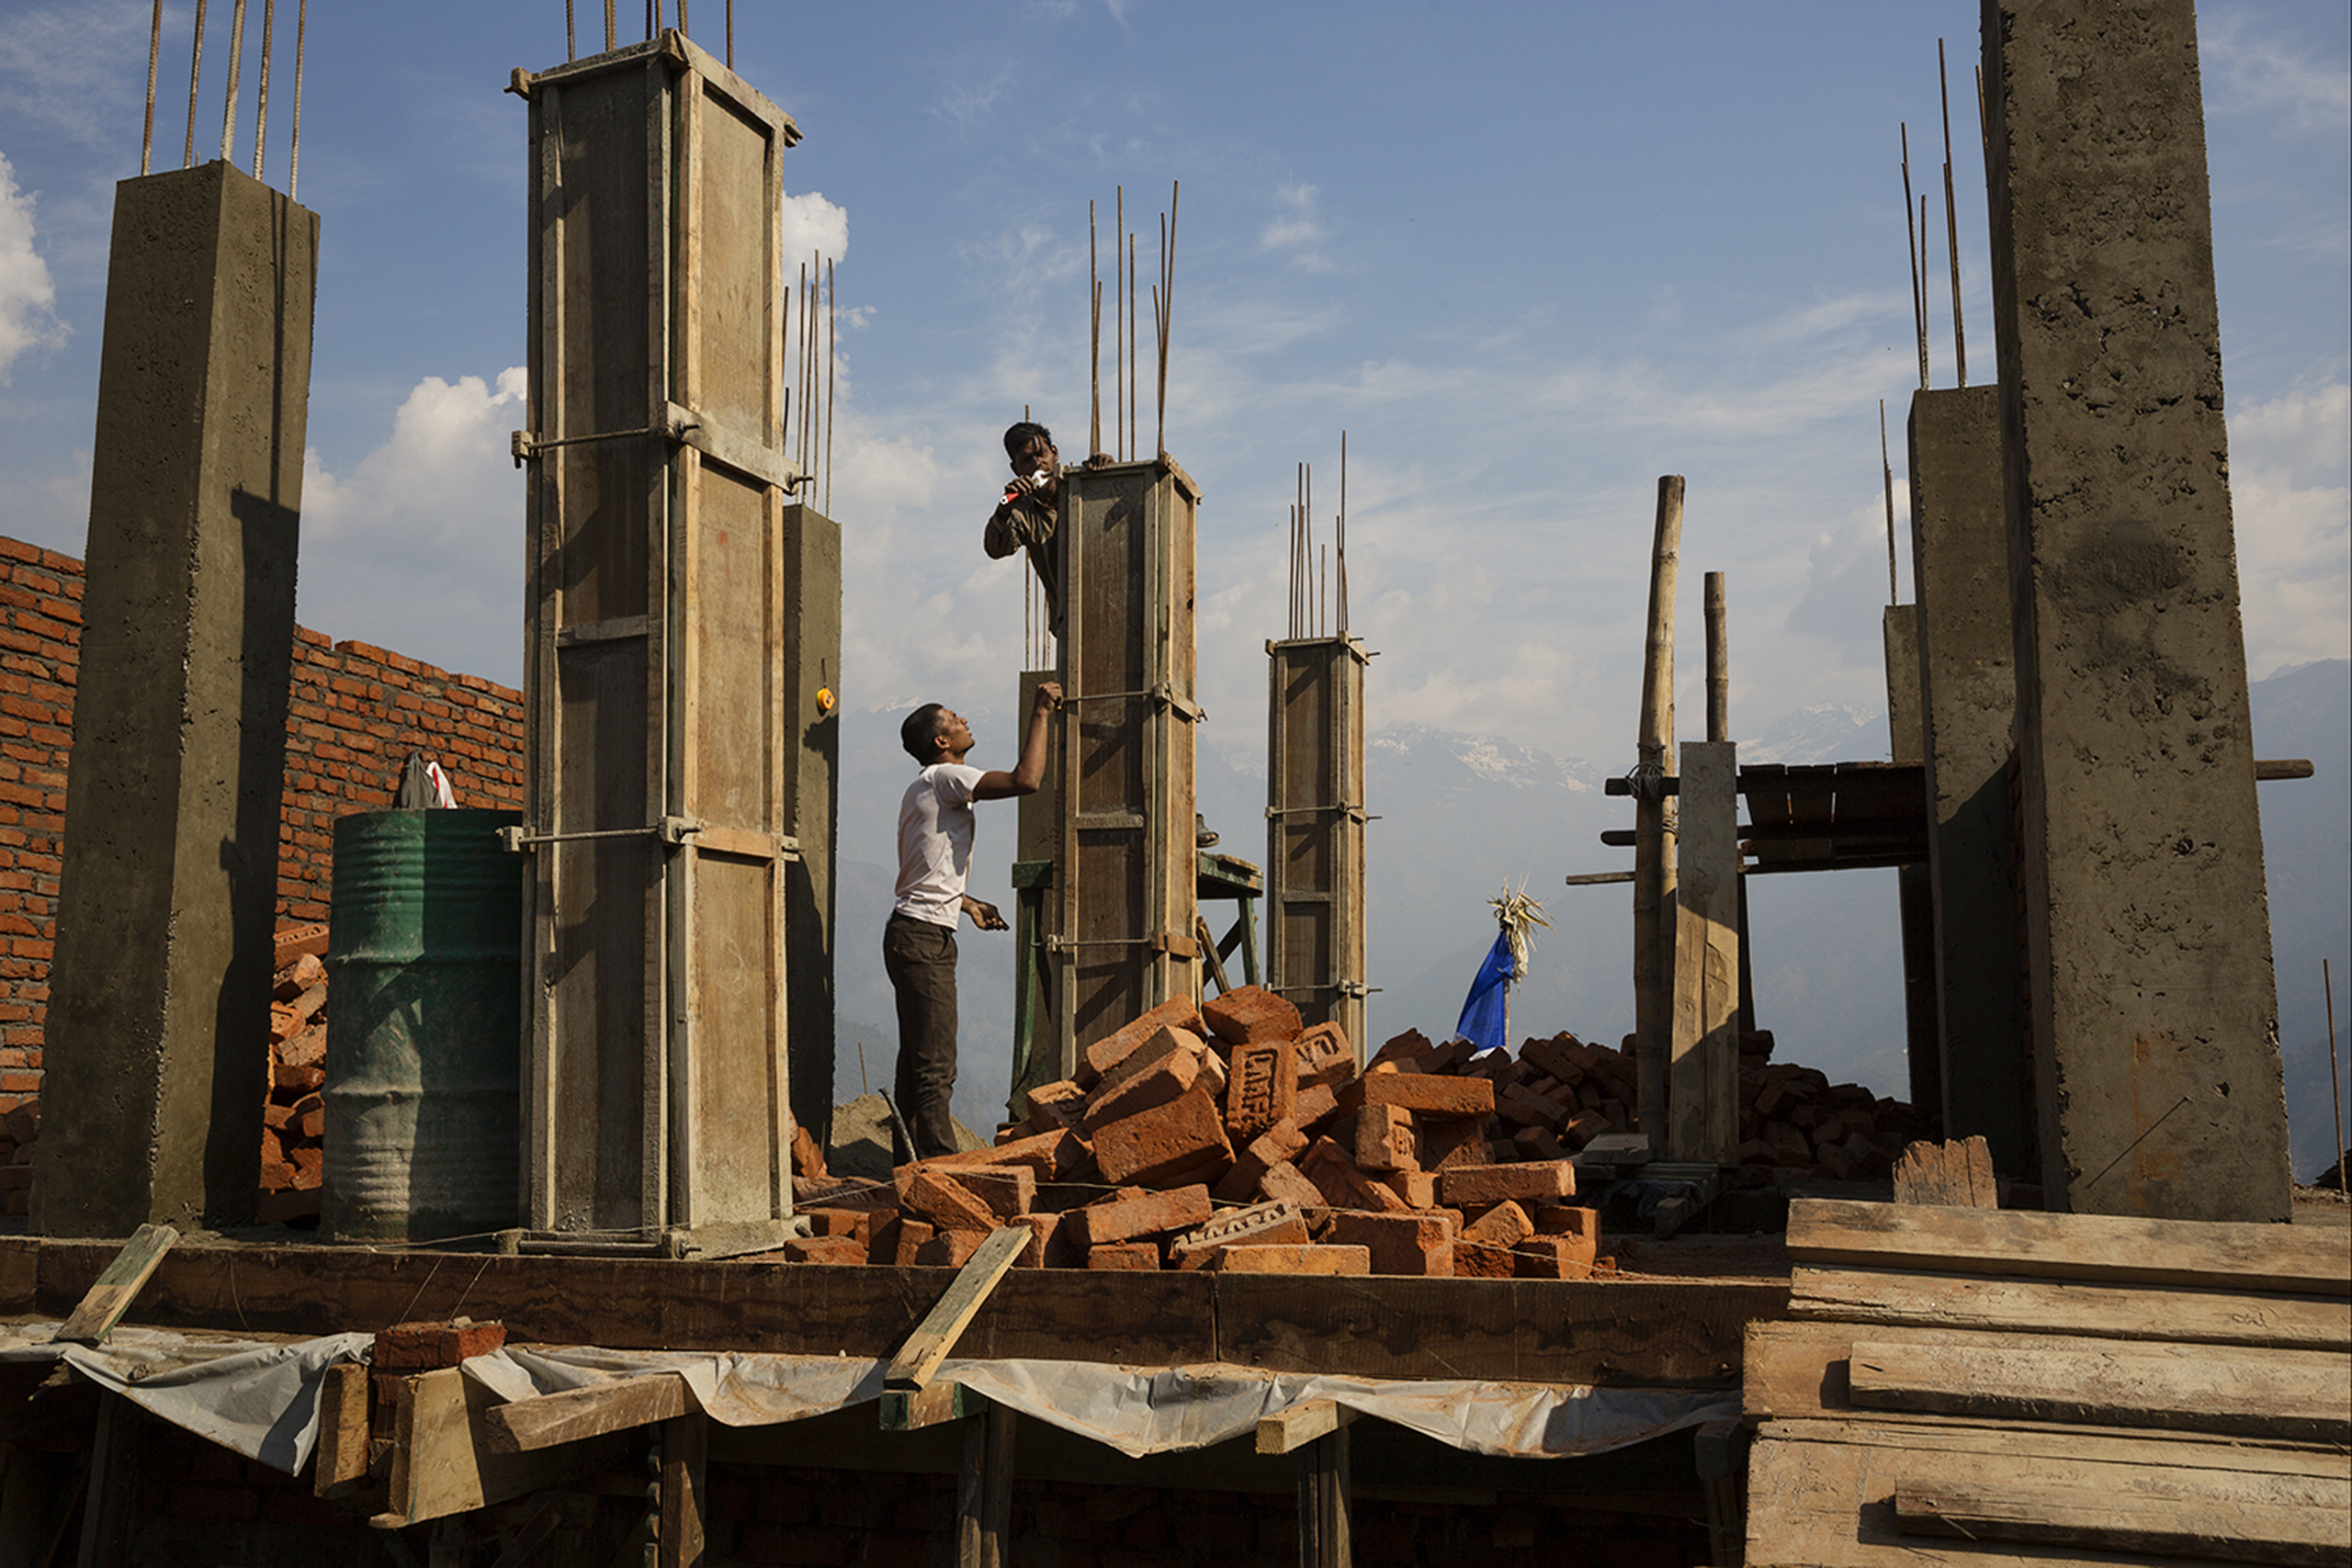 James-Nachtwey-Nepal-Disaster-earthquake-rebuild-10